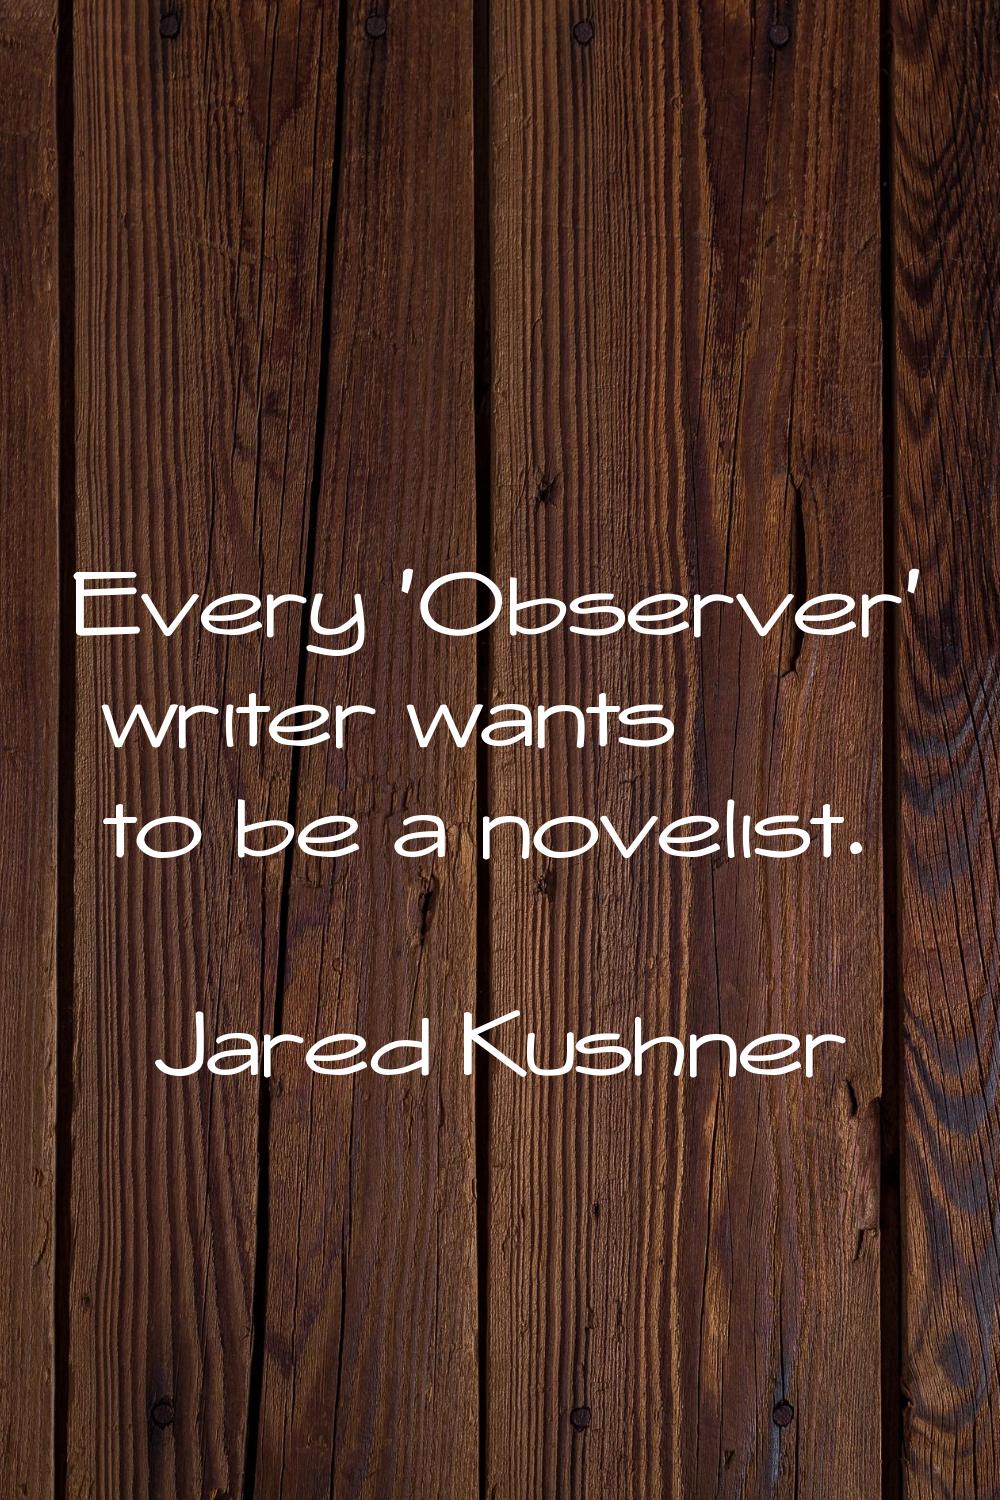 Every 'Observer' writer wants to be a novelist.